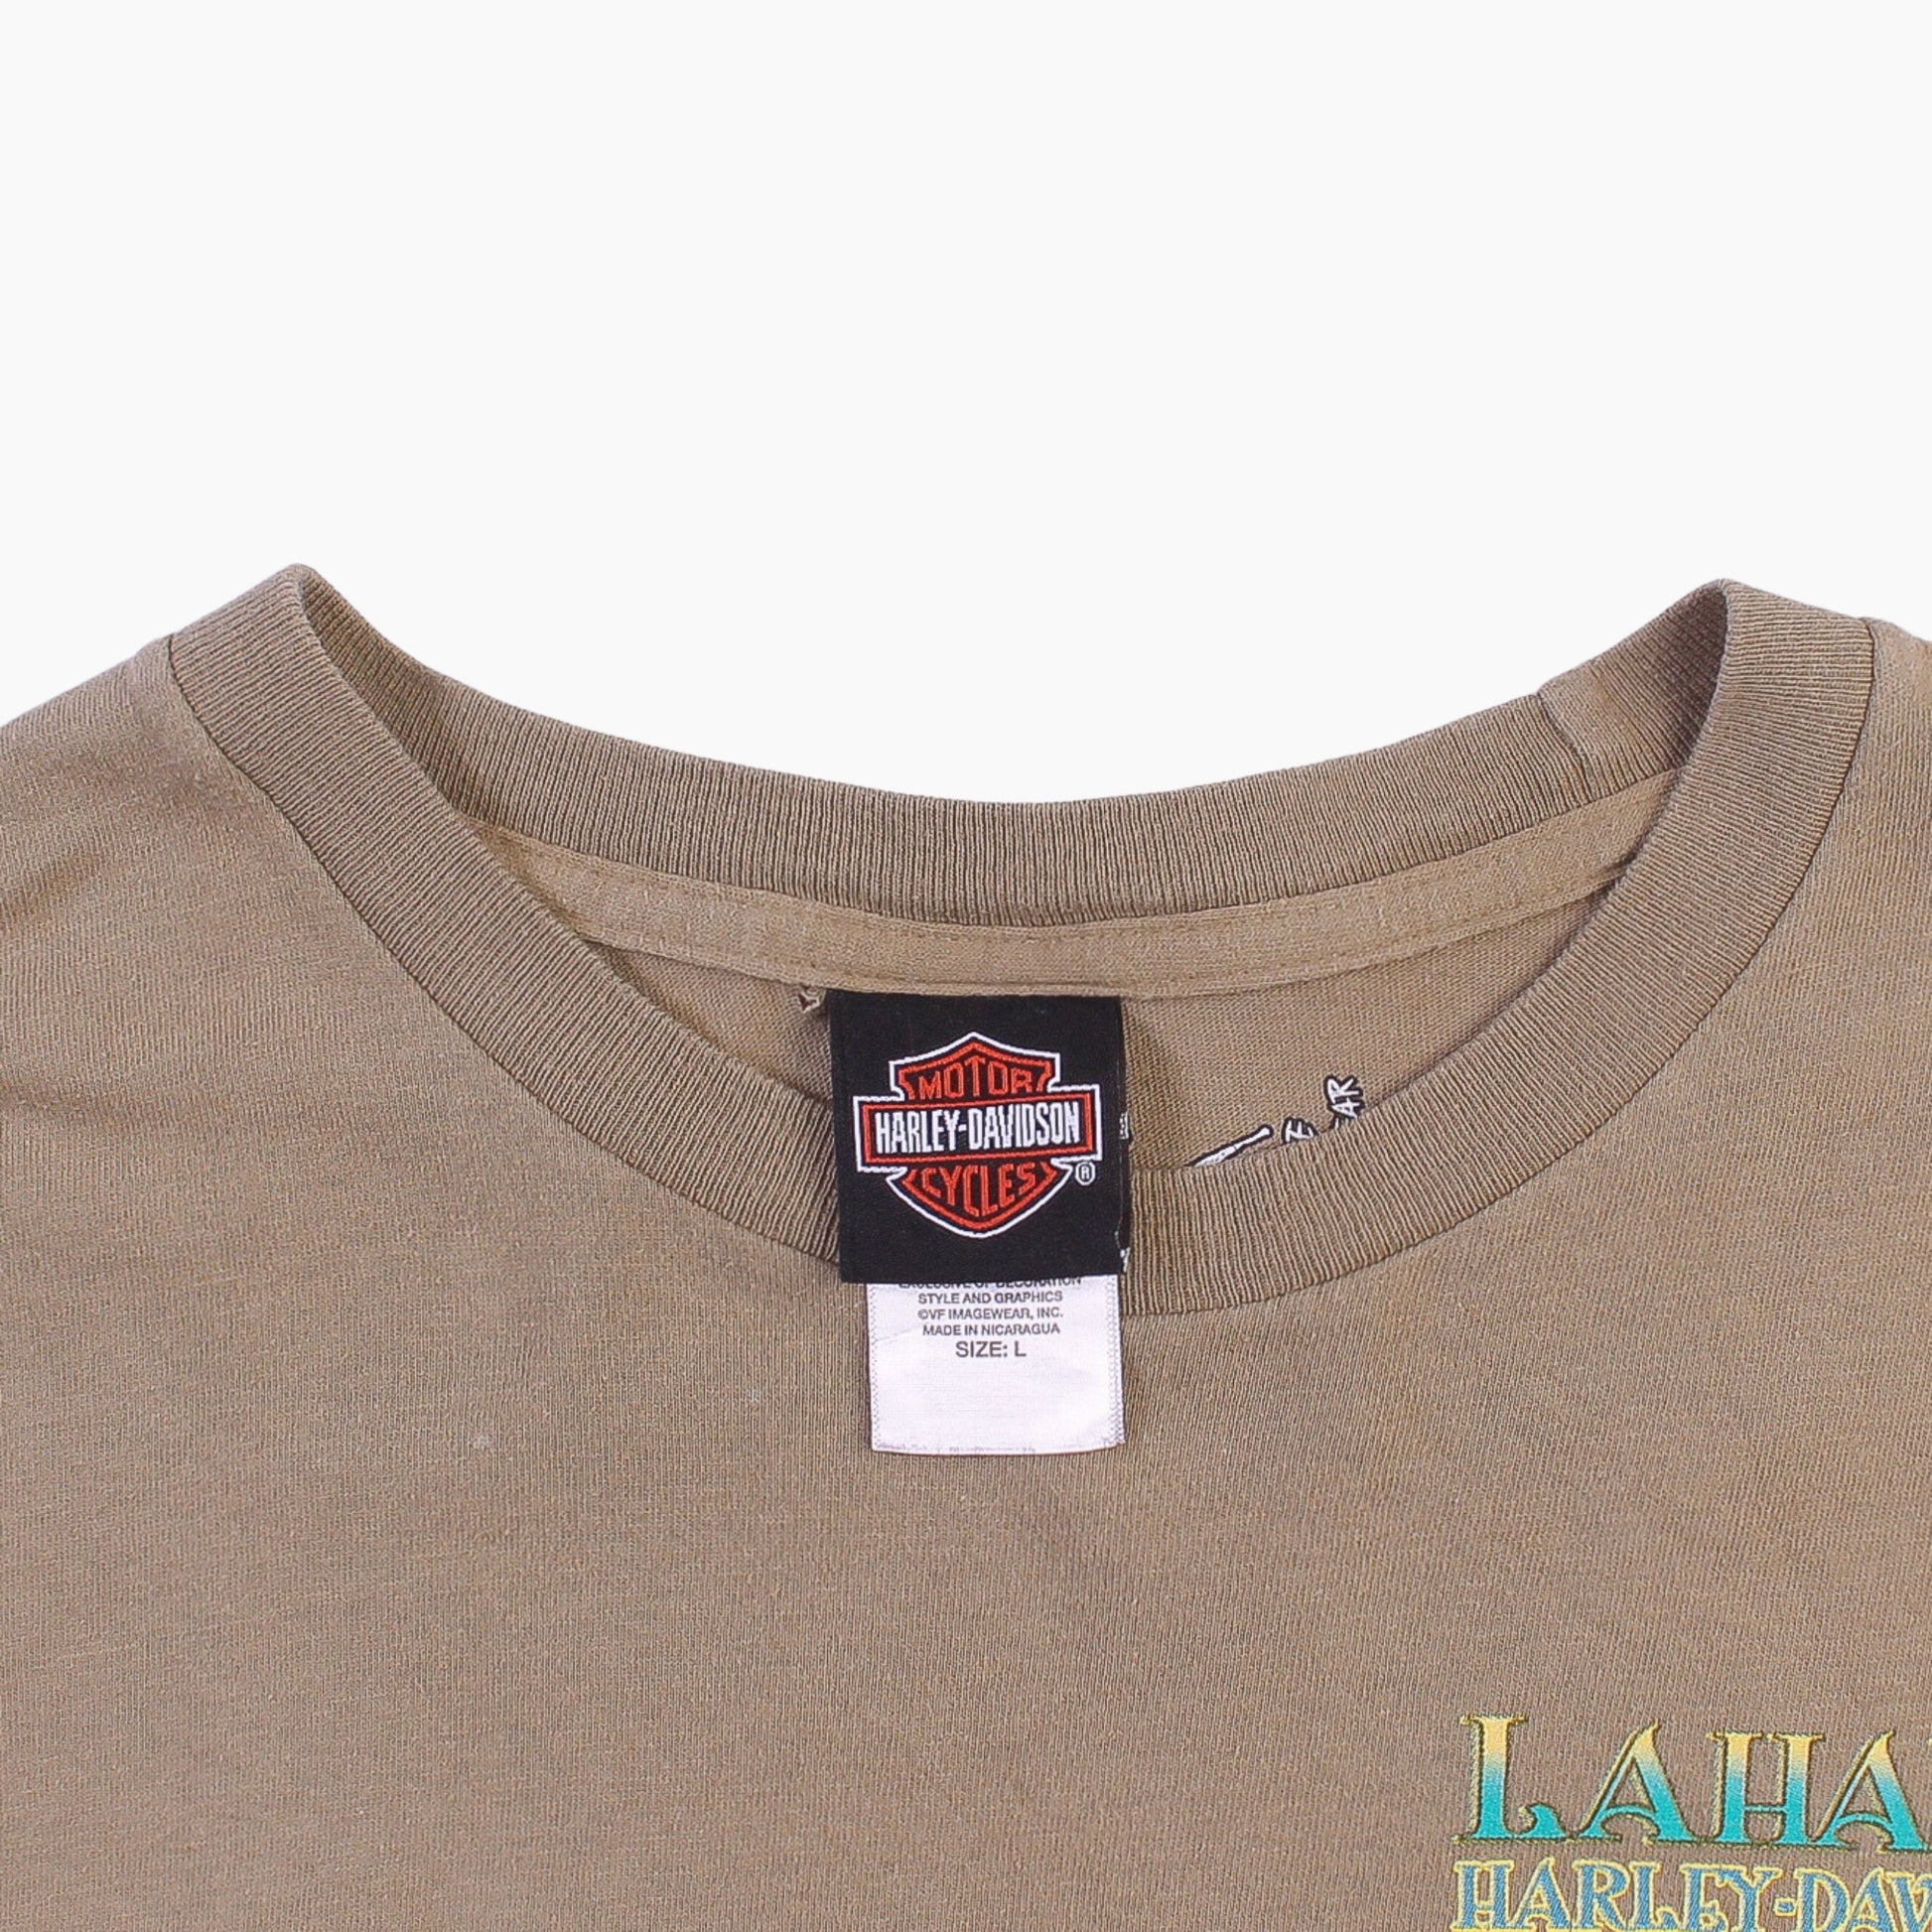 'Lahaina' T-Shirt - American Madness